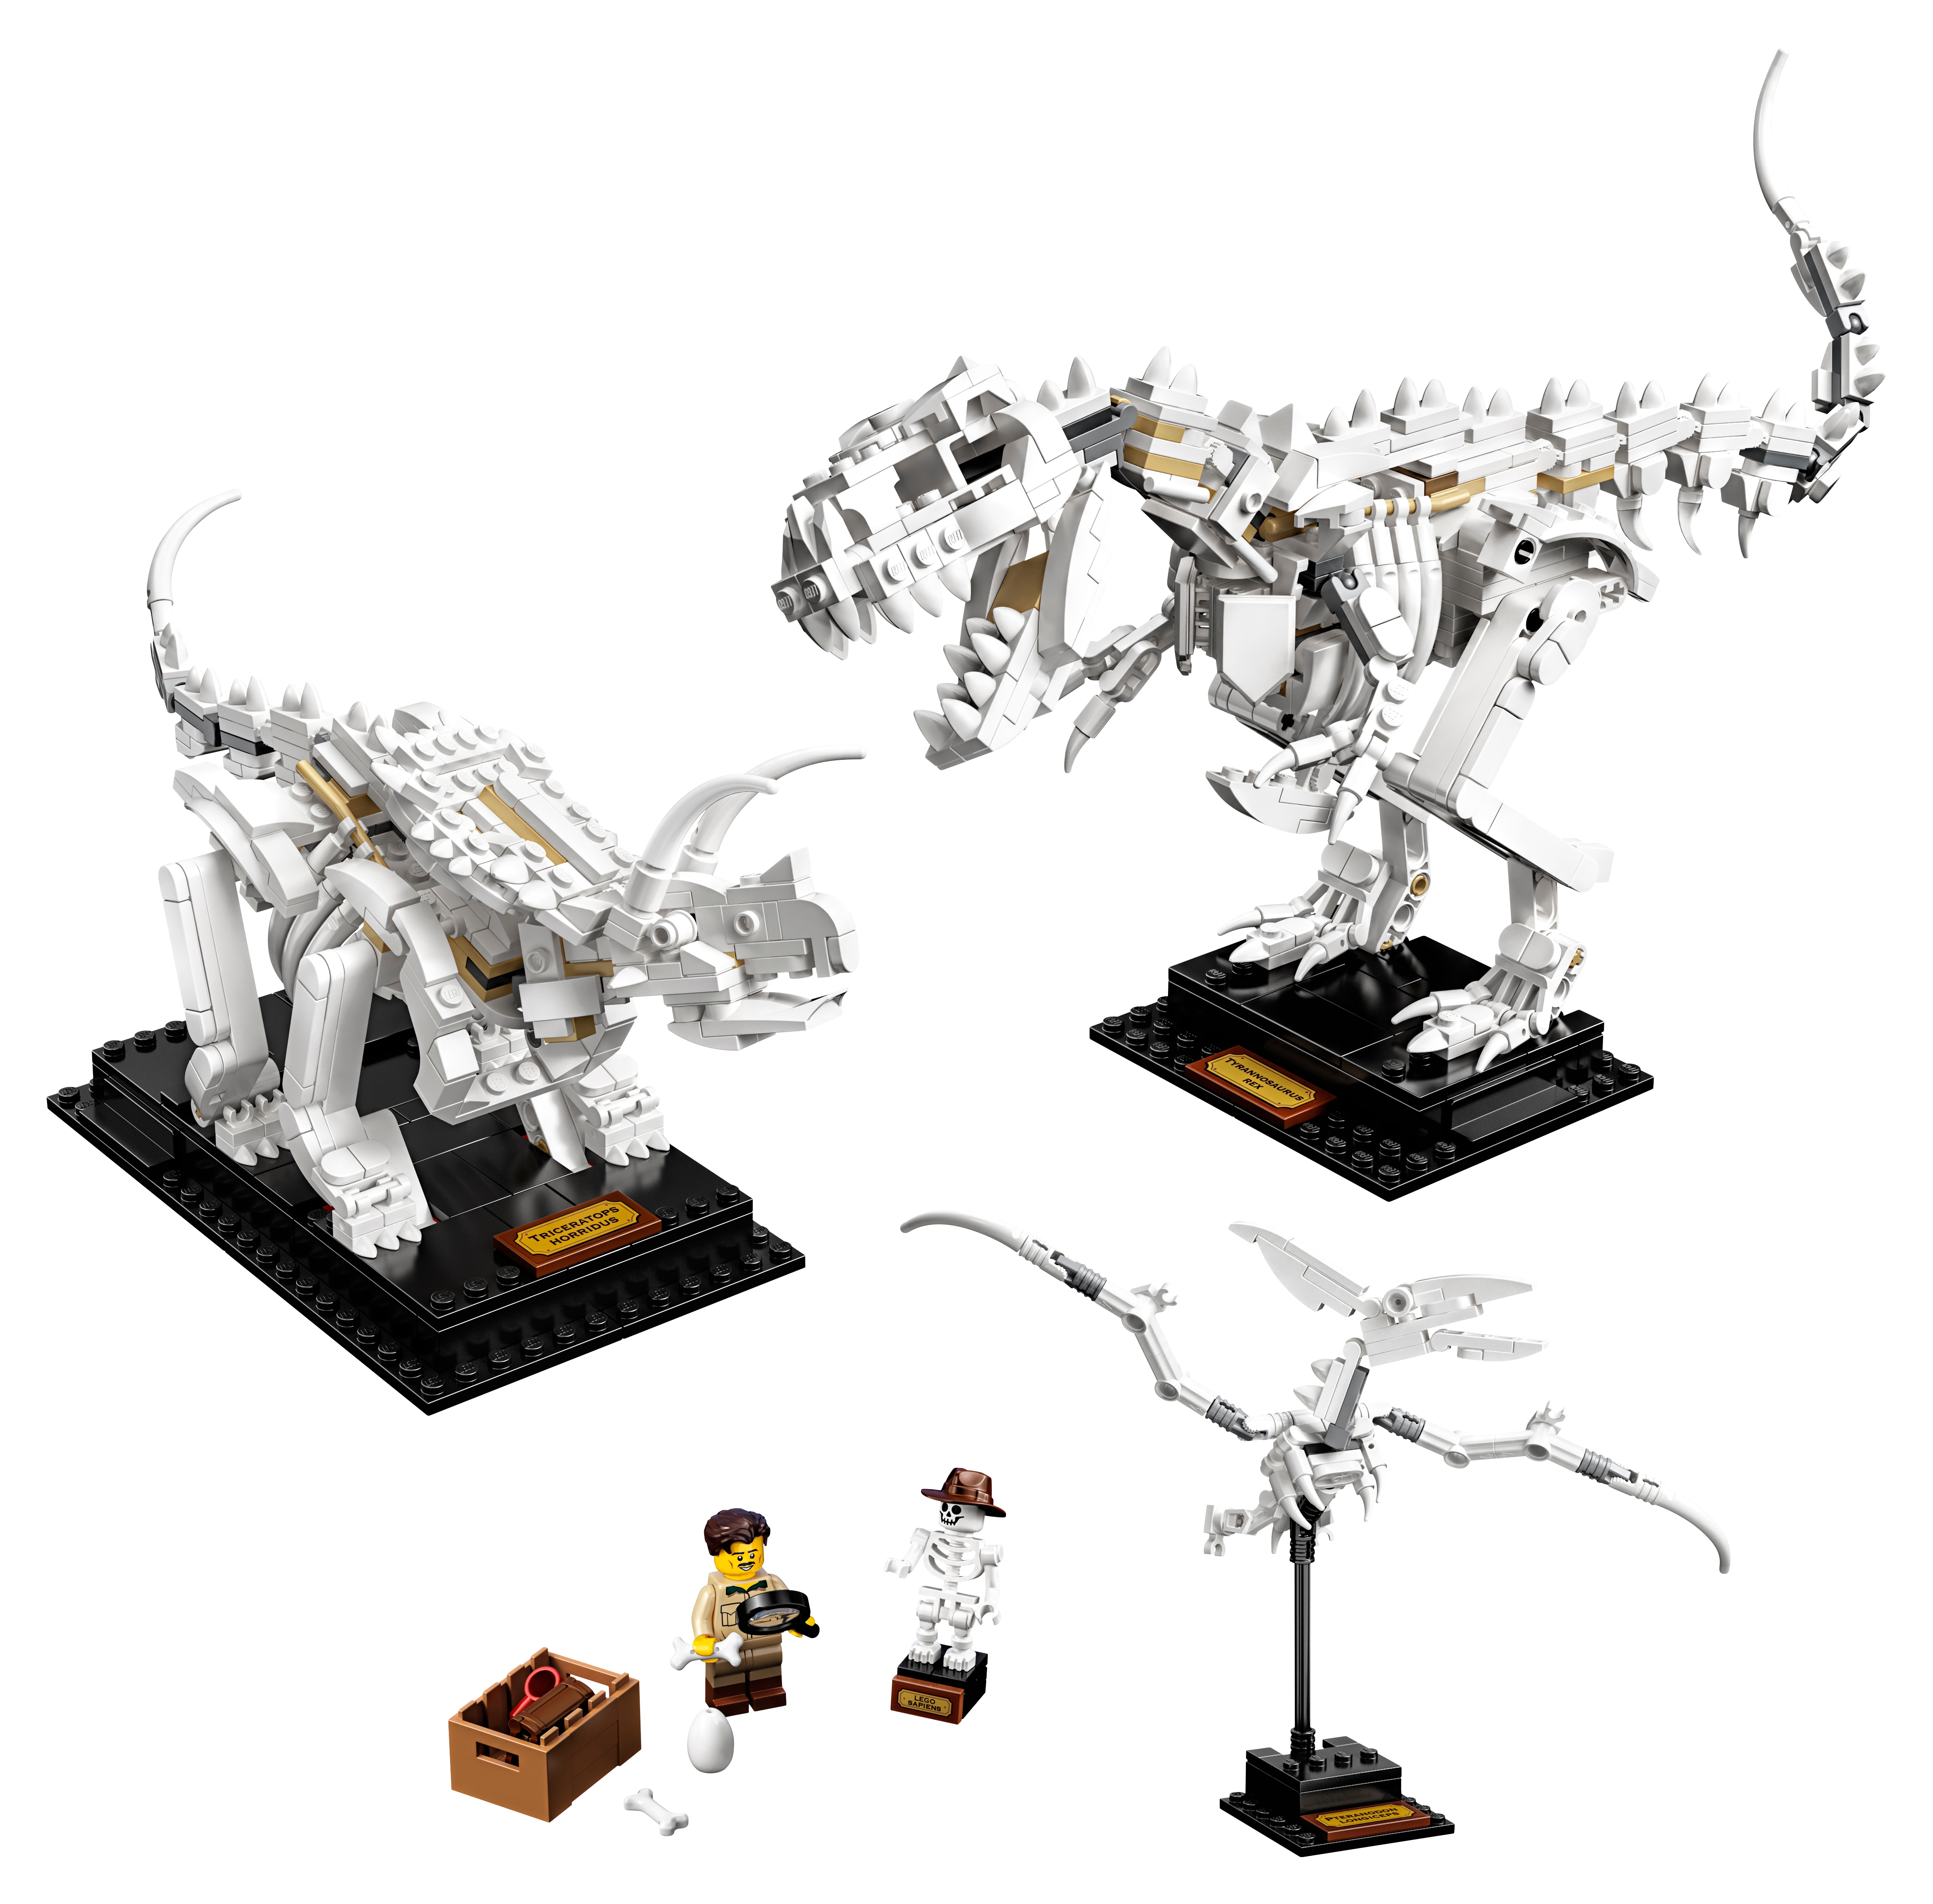 deze bagageruimte Gluren Dinosaurusfossielen 21320 | Ideas | Officiële LEGO® winkel NL